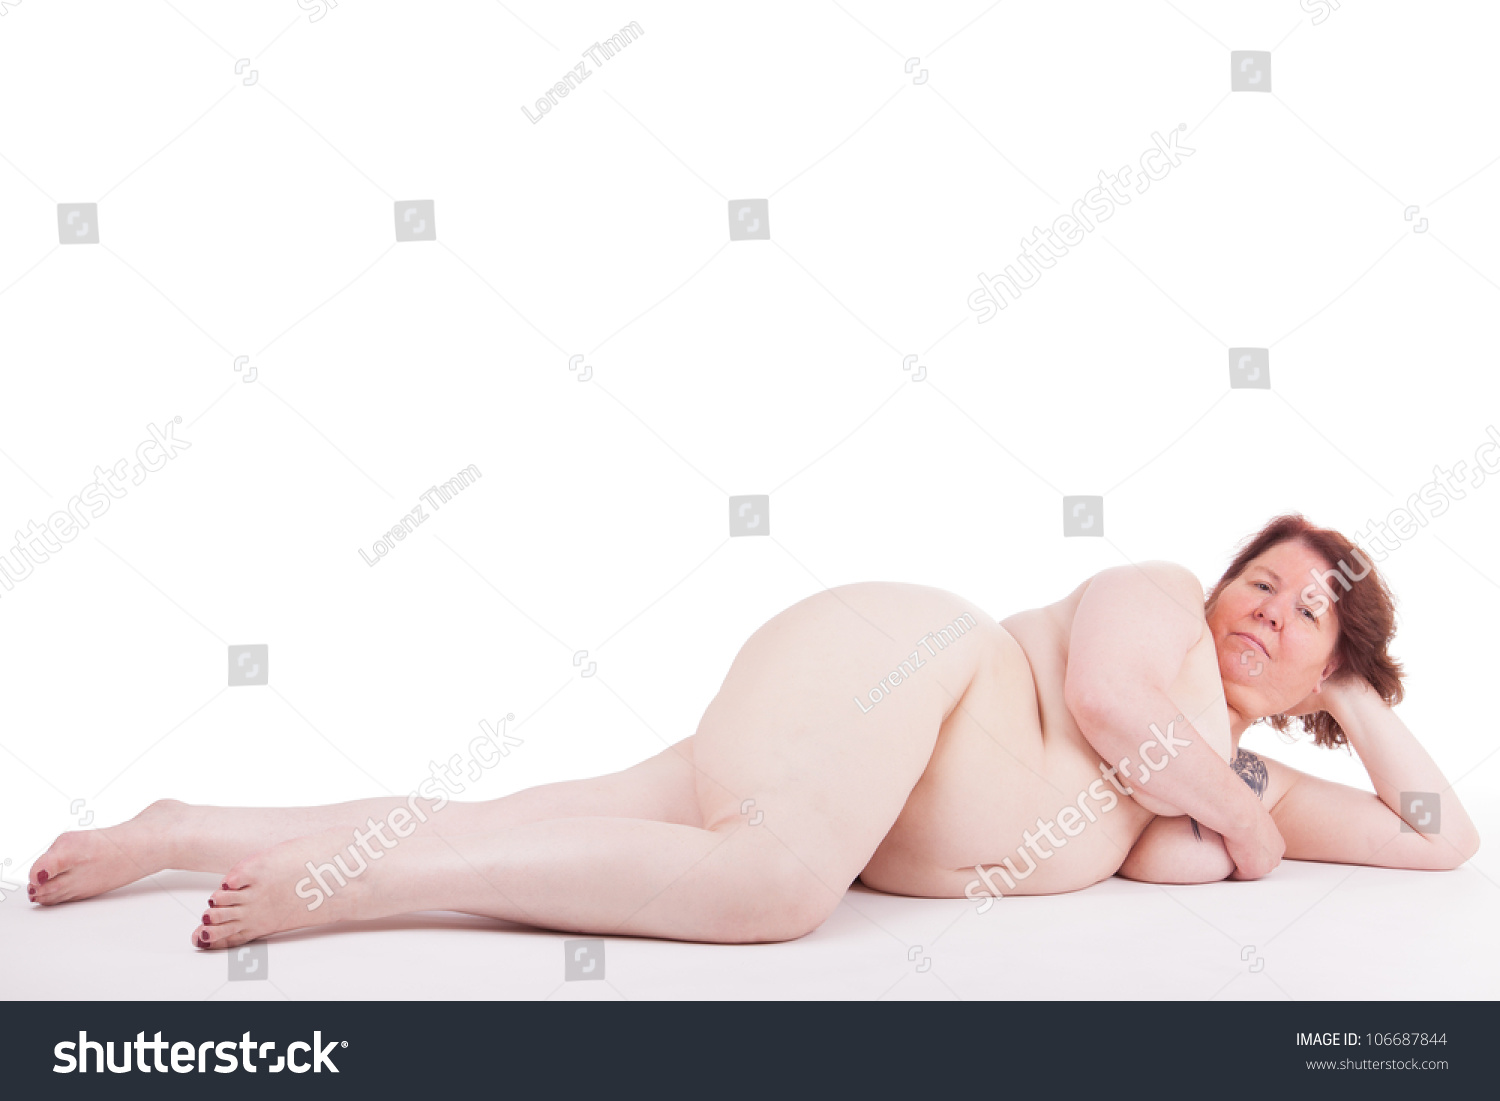 Nude Fat Woman